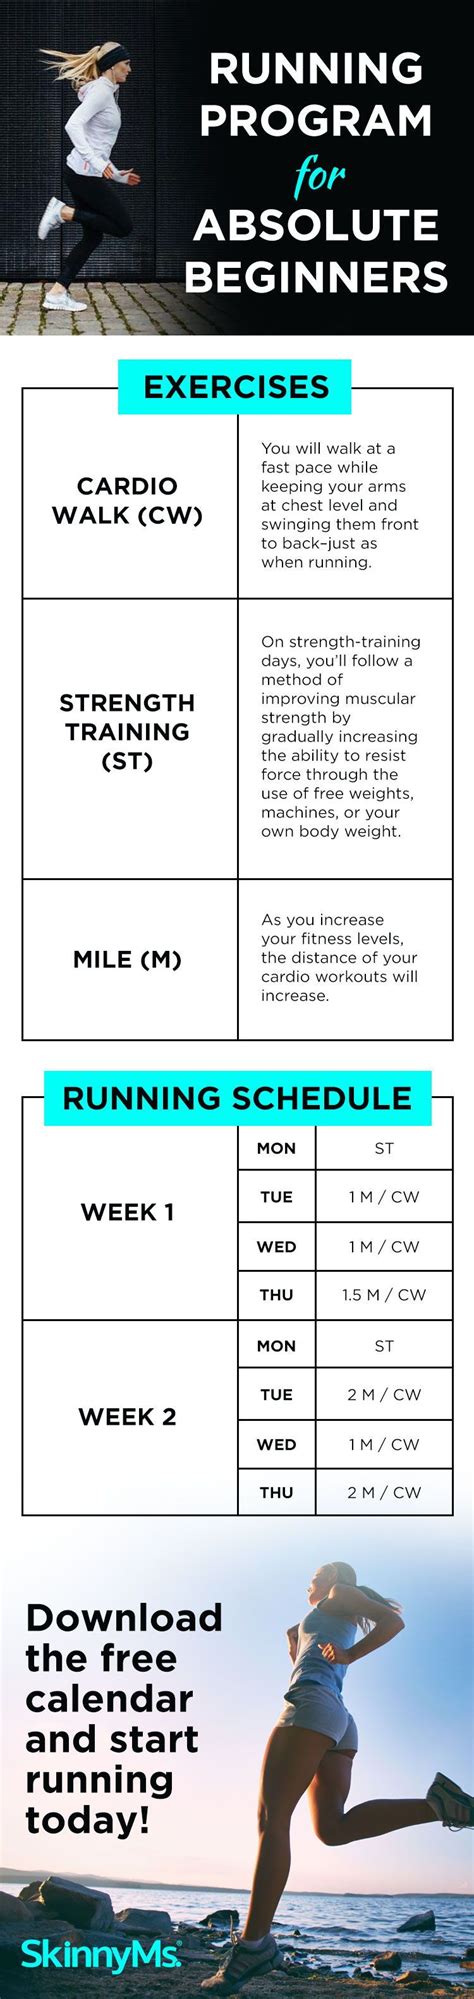 Running Program for Absolute Beginners | Running program ...